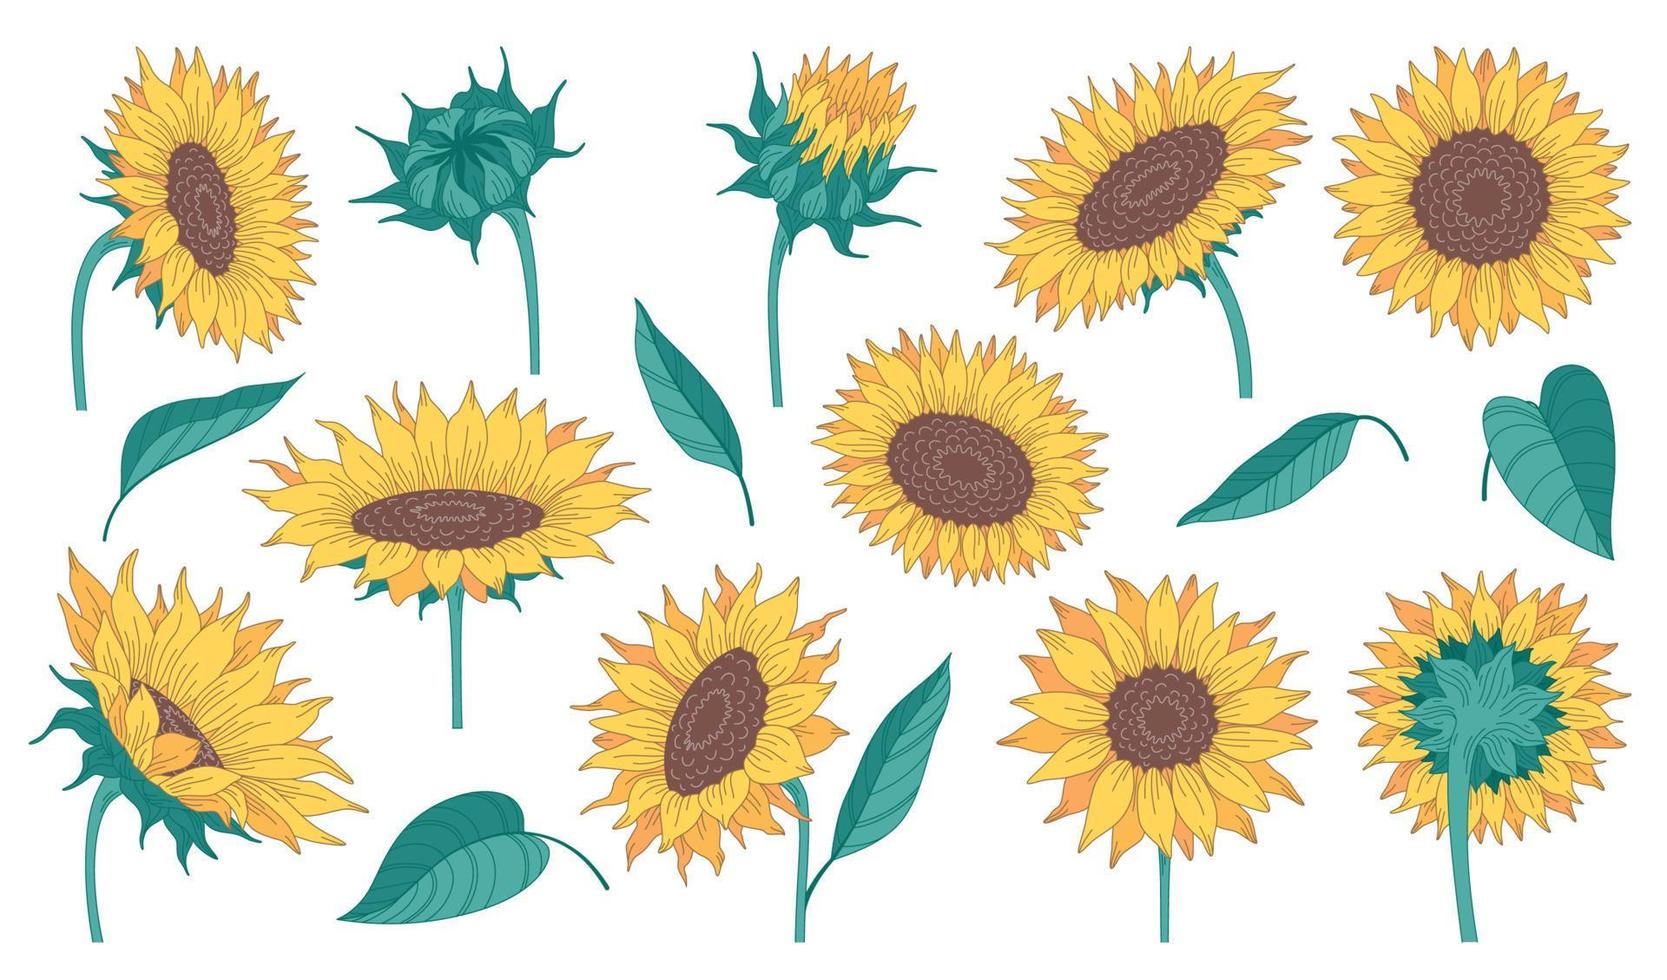 Sunflowers Cartoon Collection vector